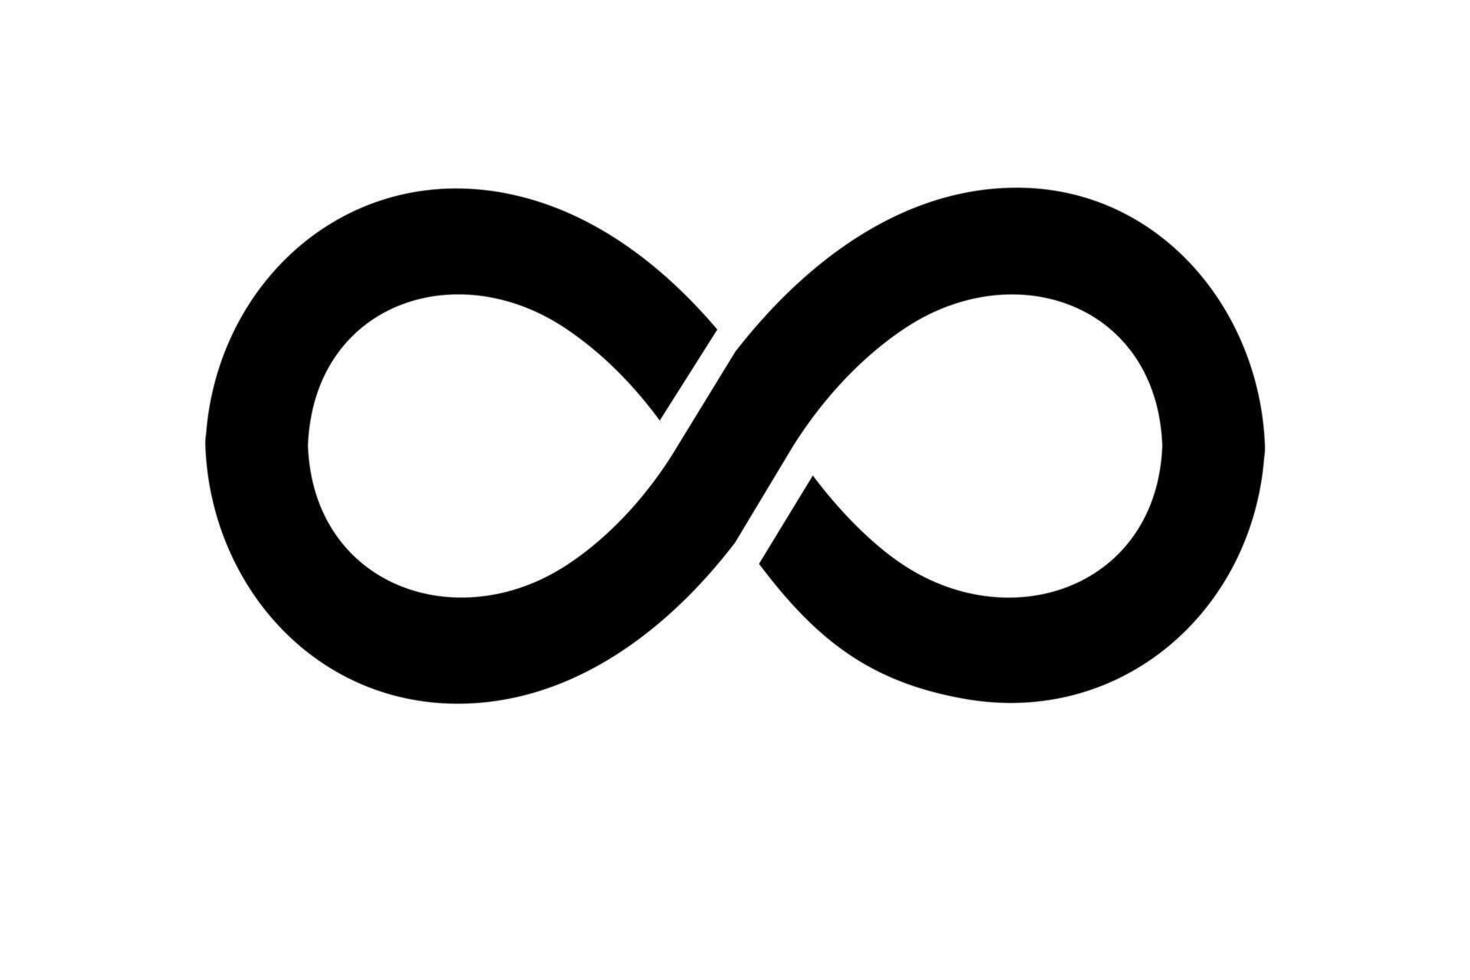 infinity symbol, logo black flat on white background isolated vector